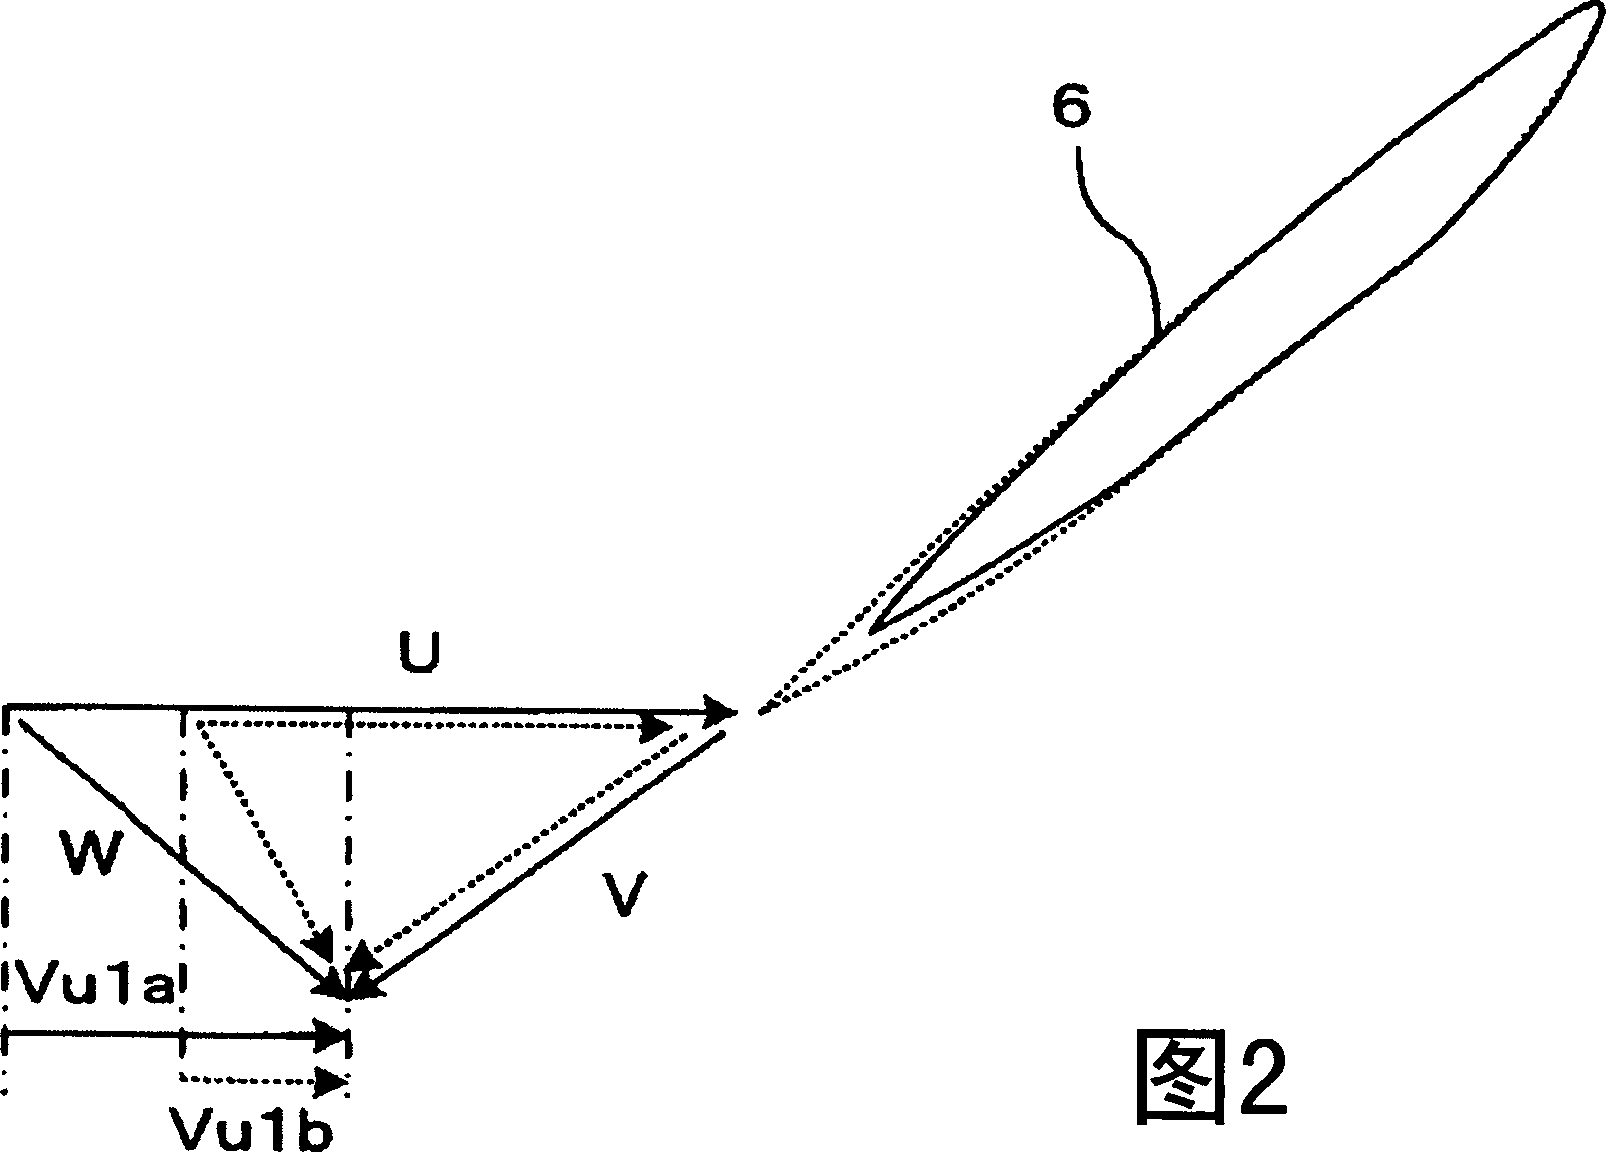 Axial radial-flow type turbine